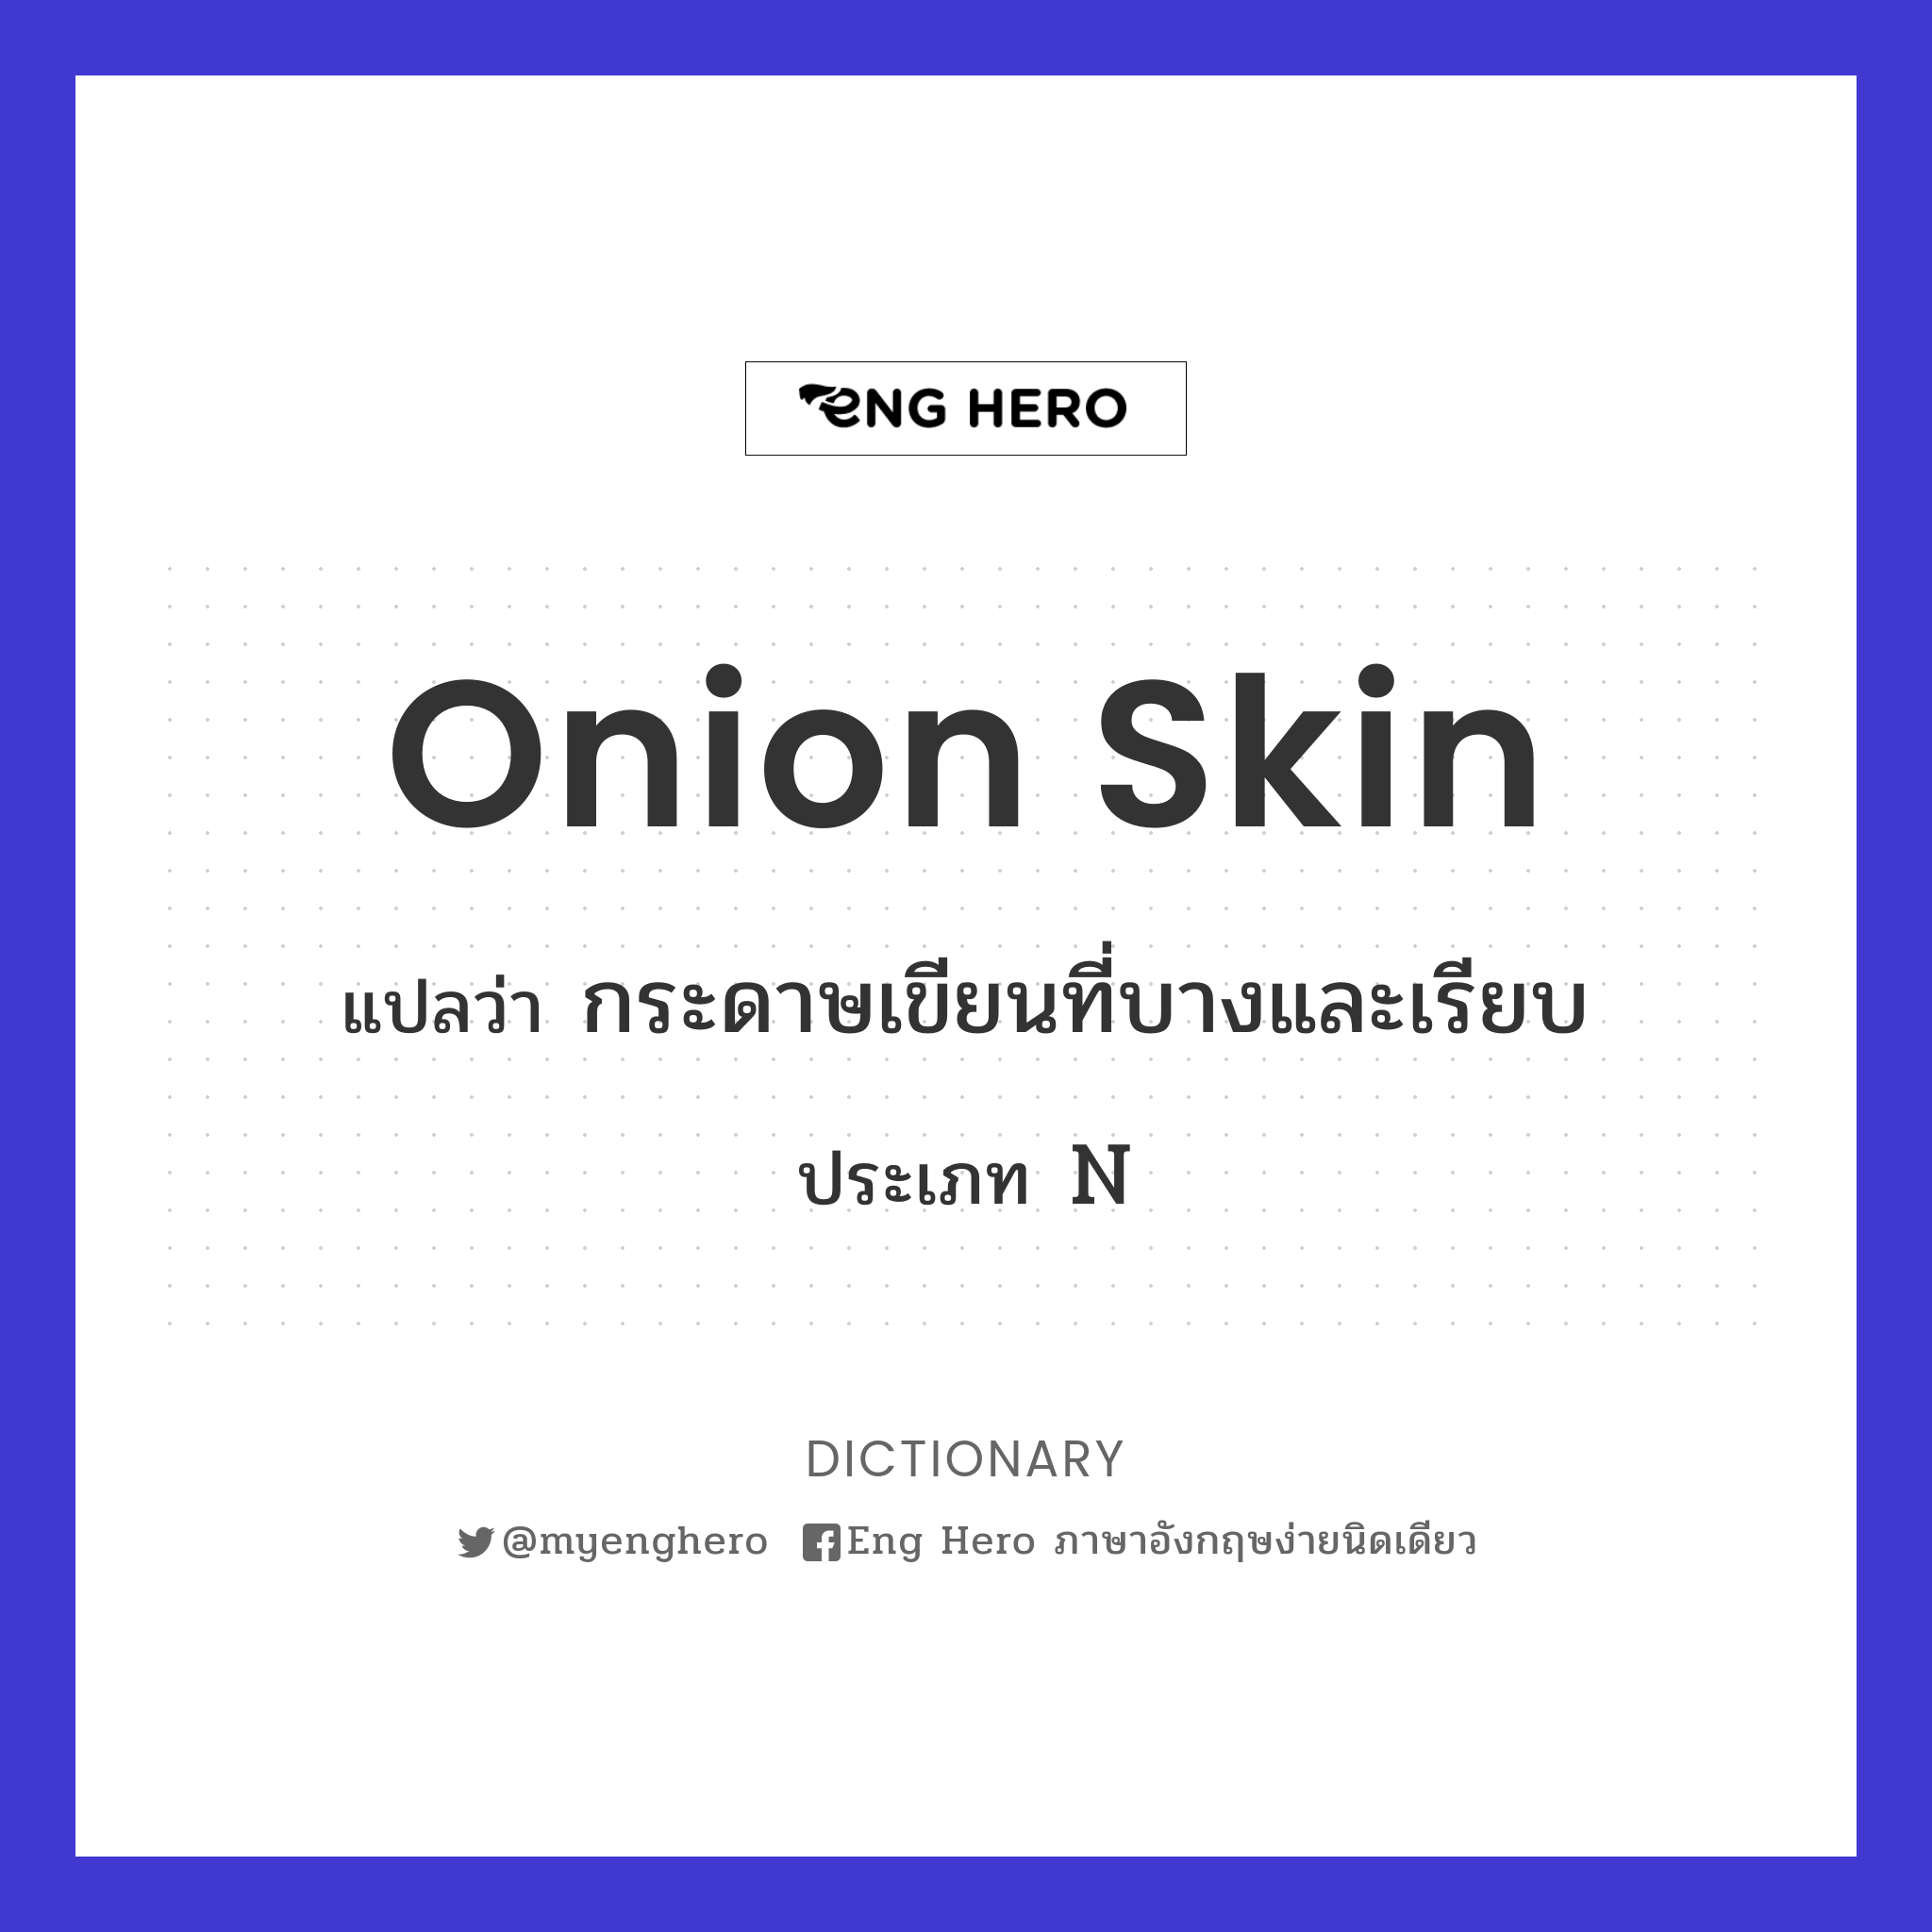 onion skin